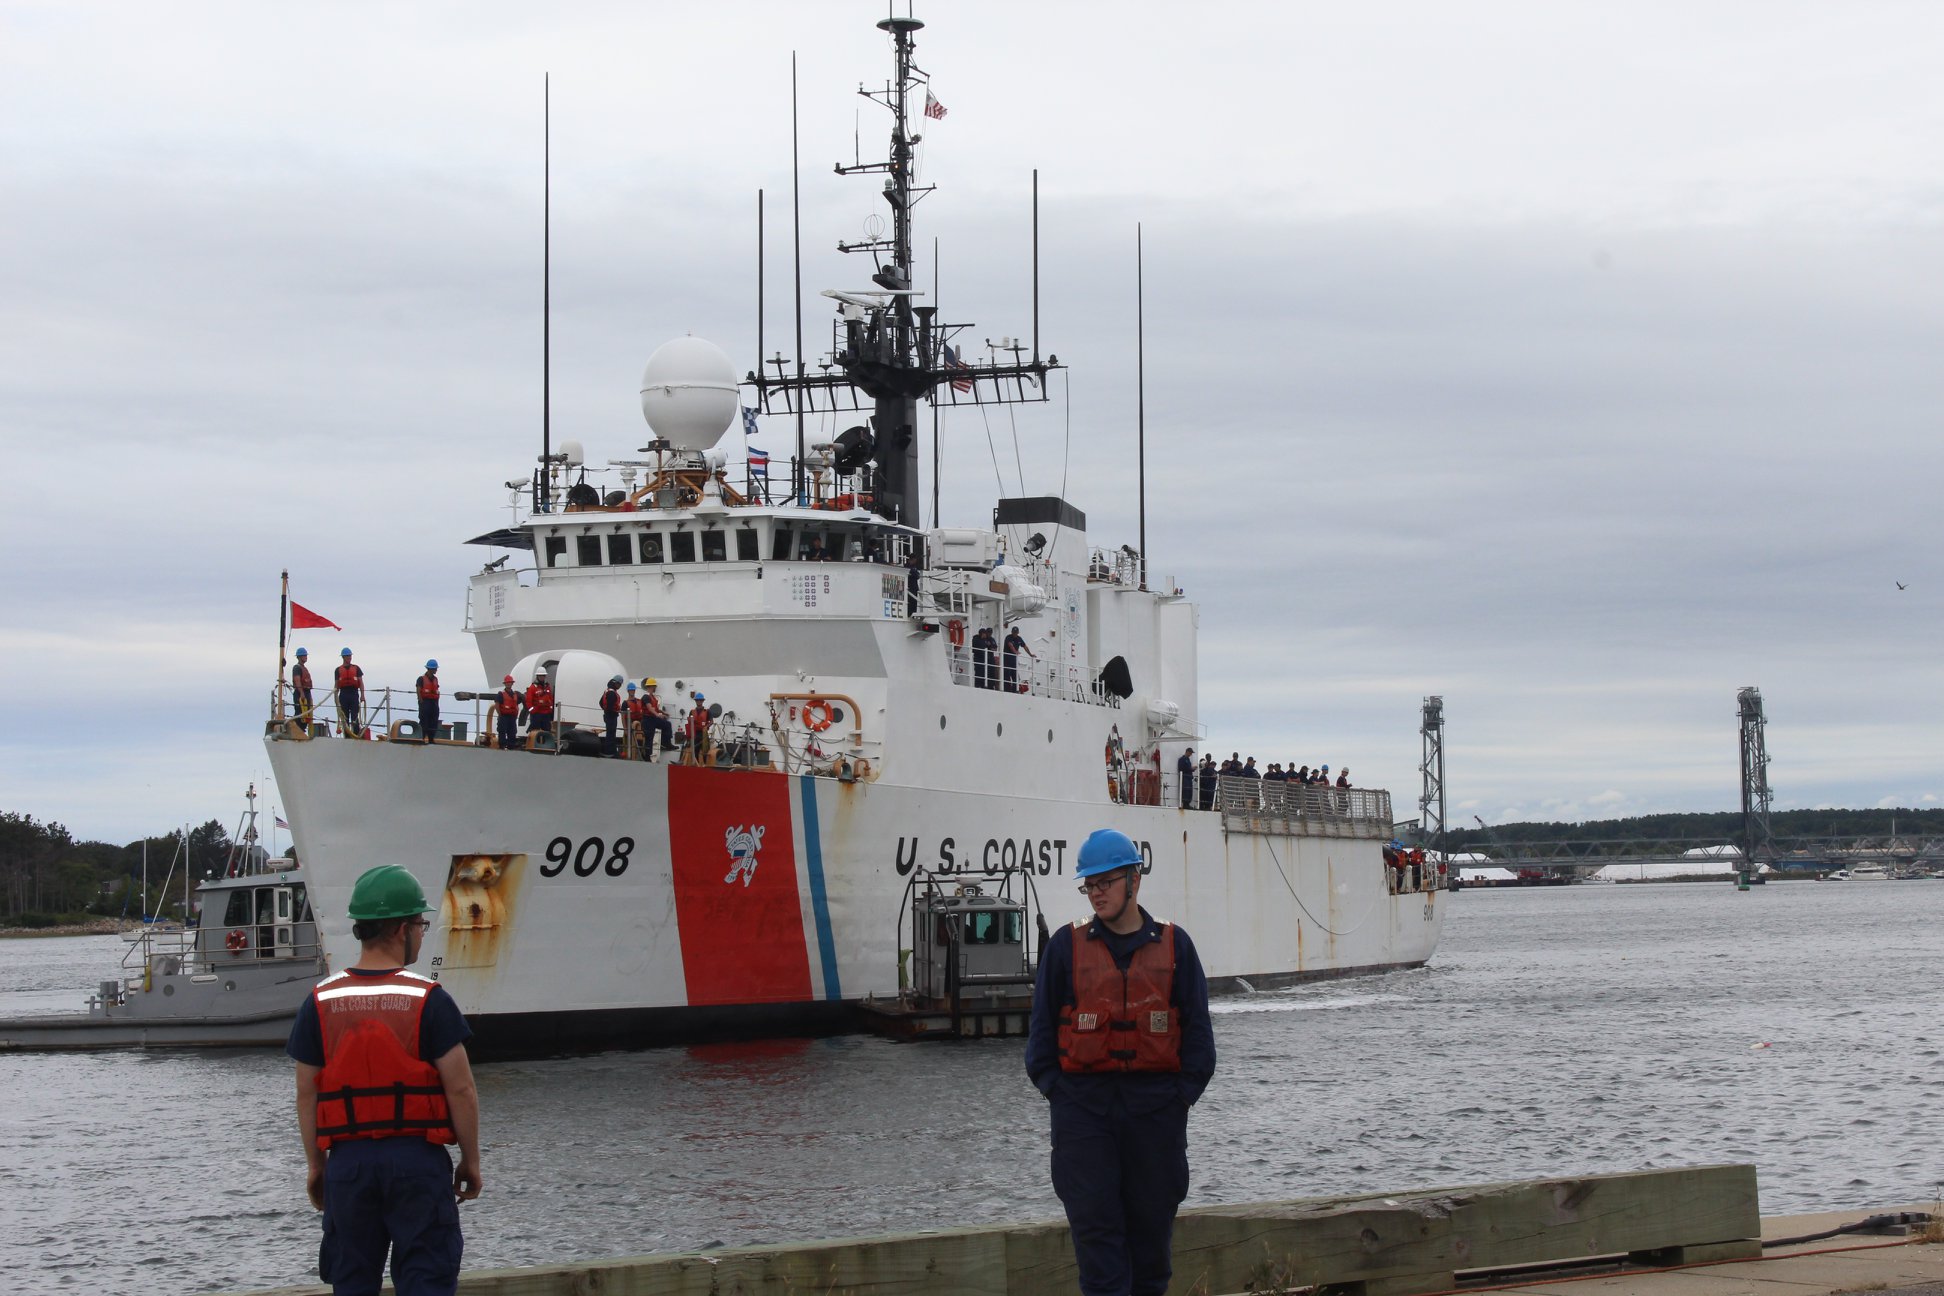 U.S. Coast Guard supports Arctic missions